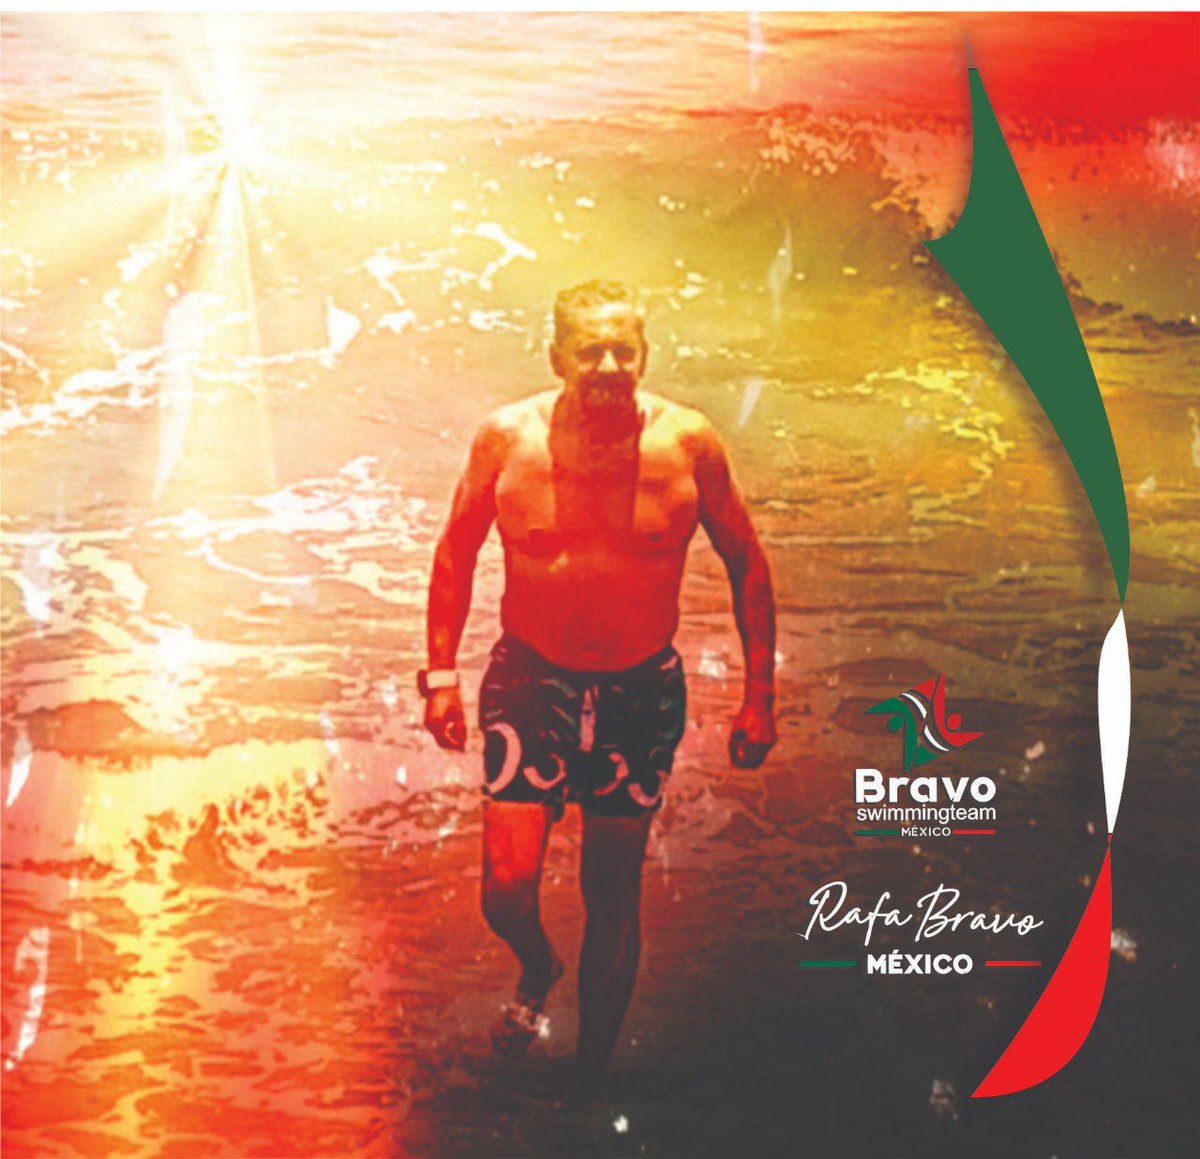 #bravoswimmingteam #20bridgesofny #couregeuostransformation #rsmmexico